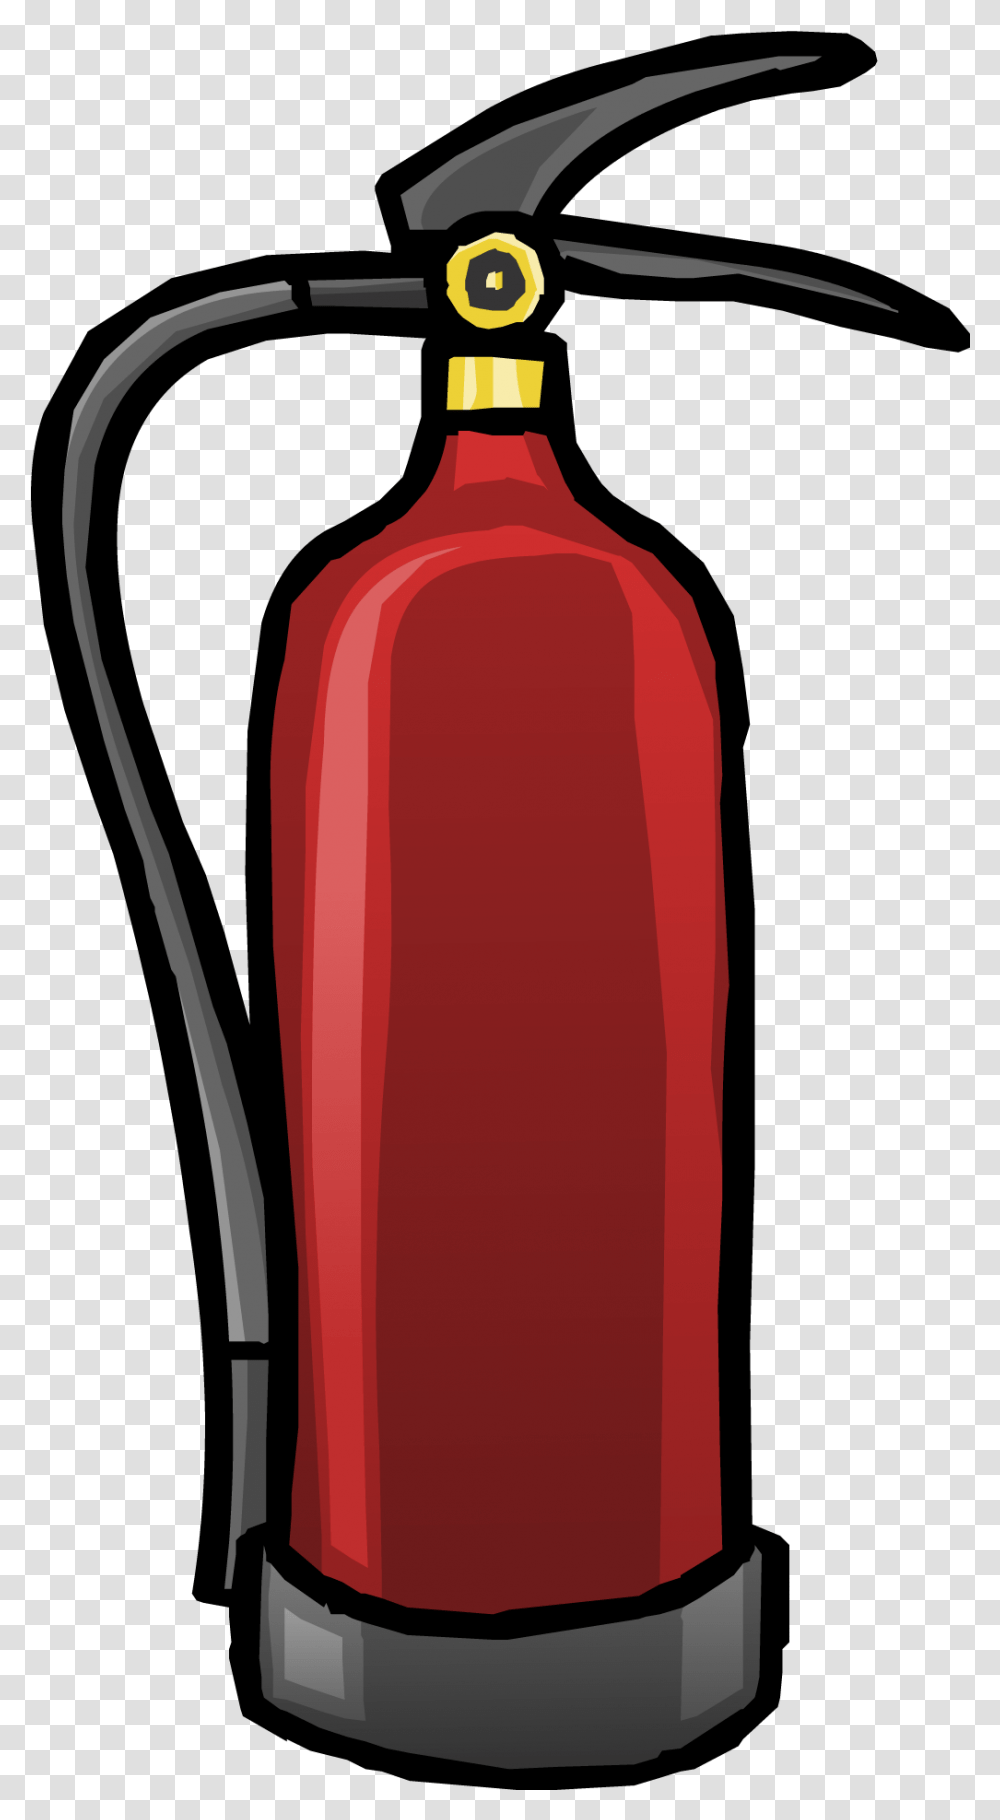 Extinguisher Fire Extinguisher Image Clipart Clip Art Background Fire Extinguisher, Ketchup, Food, Appliance, Bottle Transparent Png